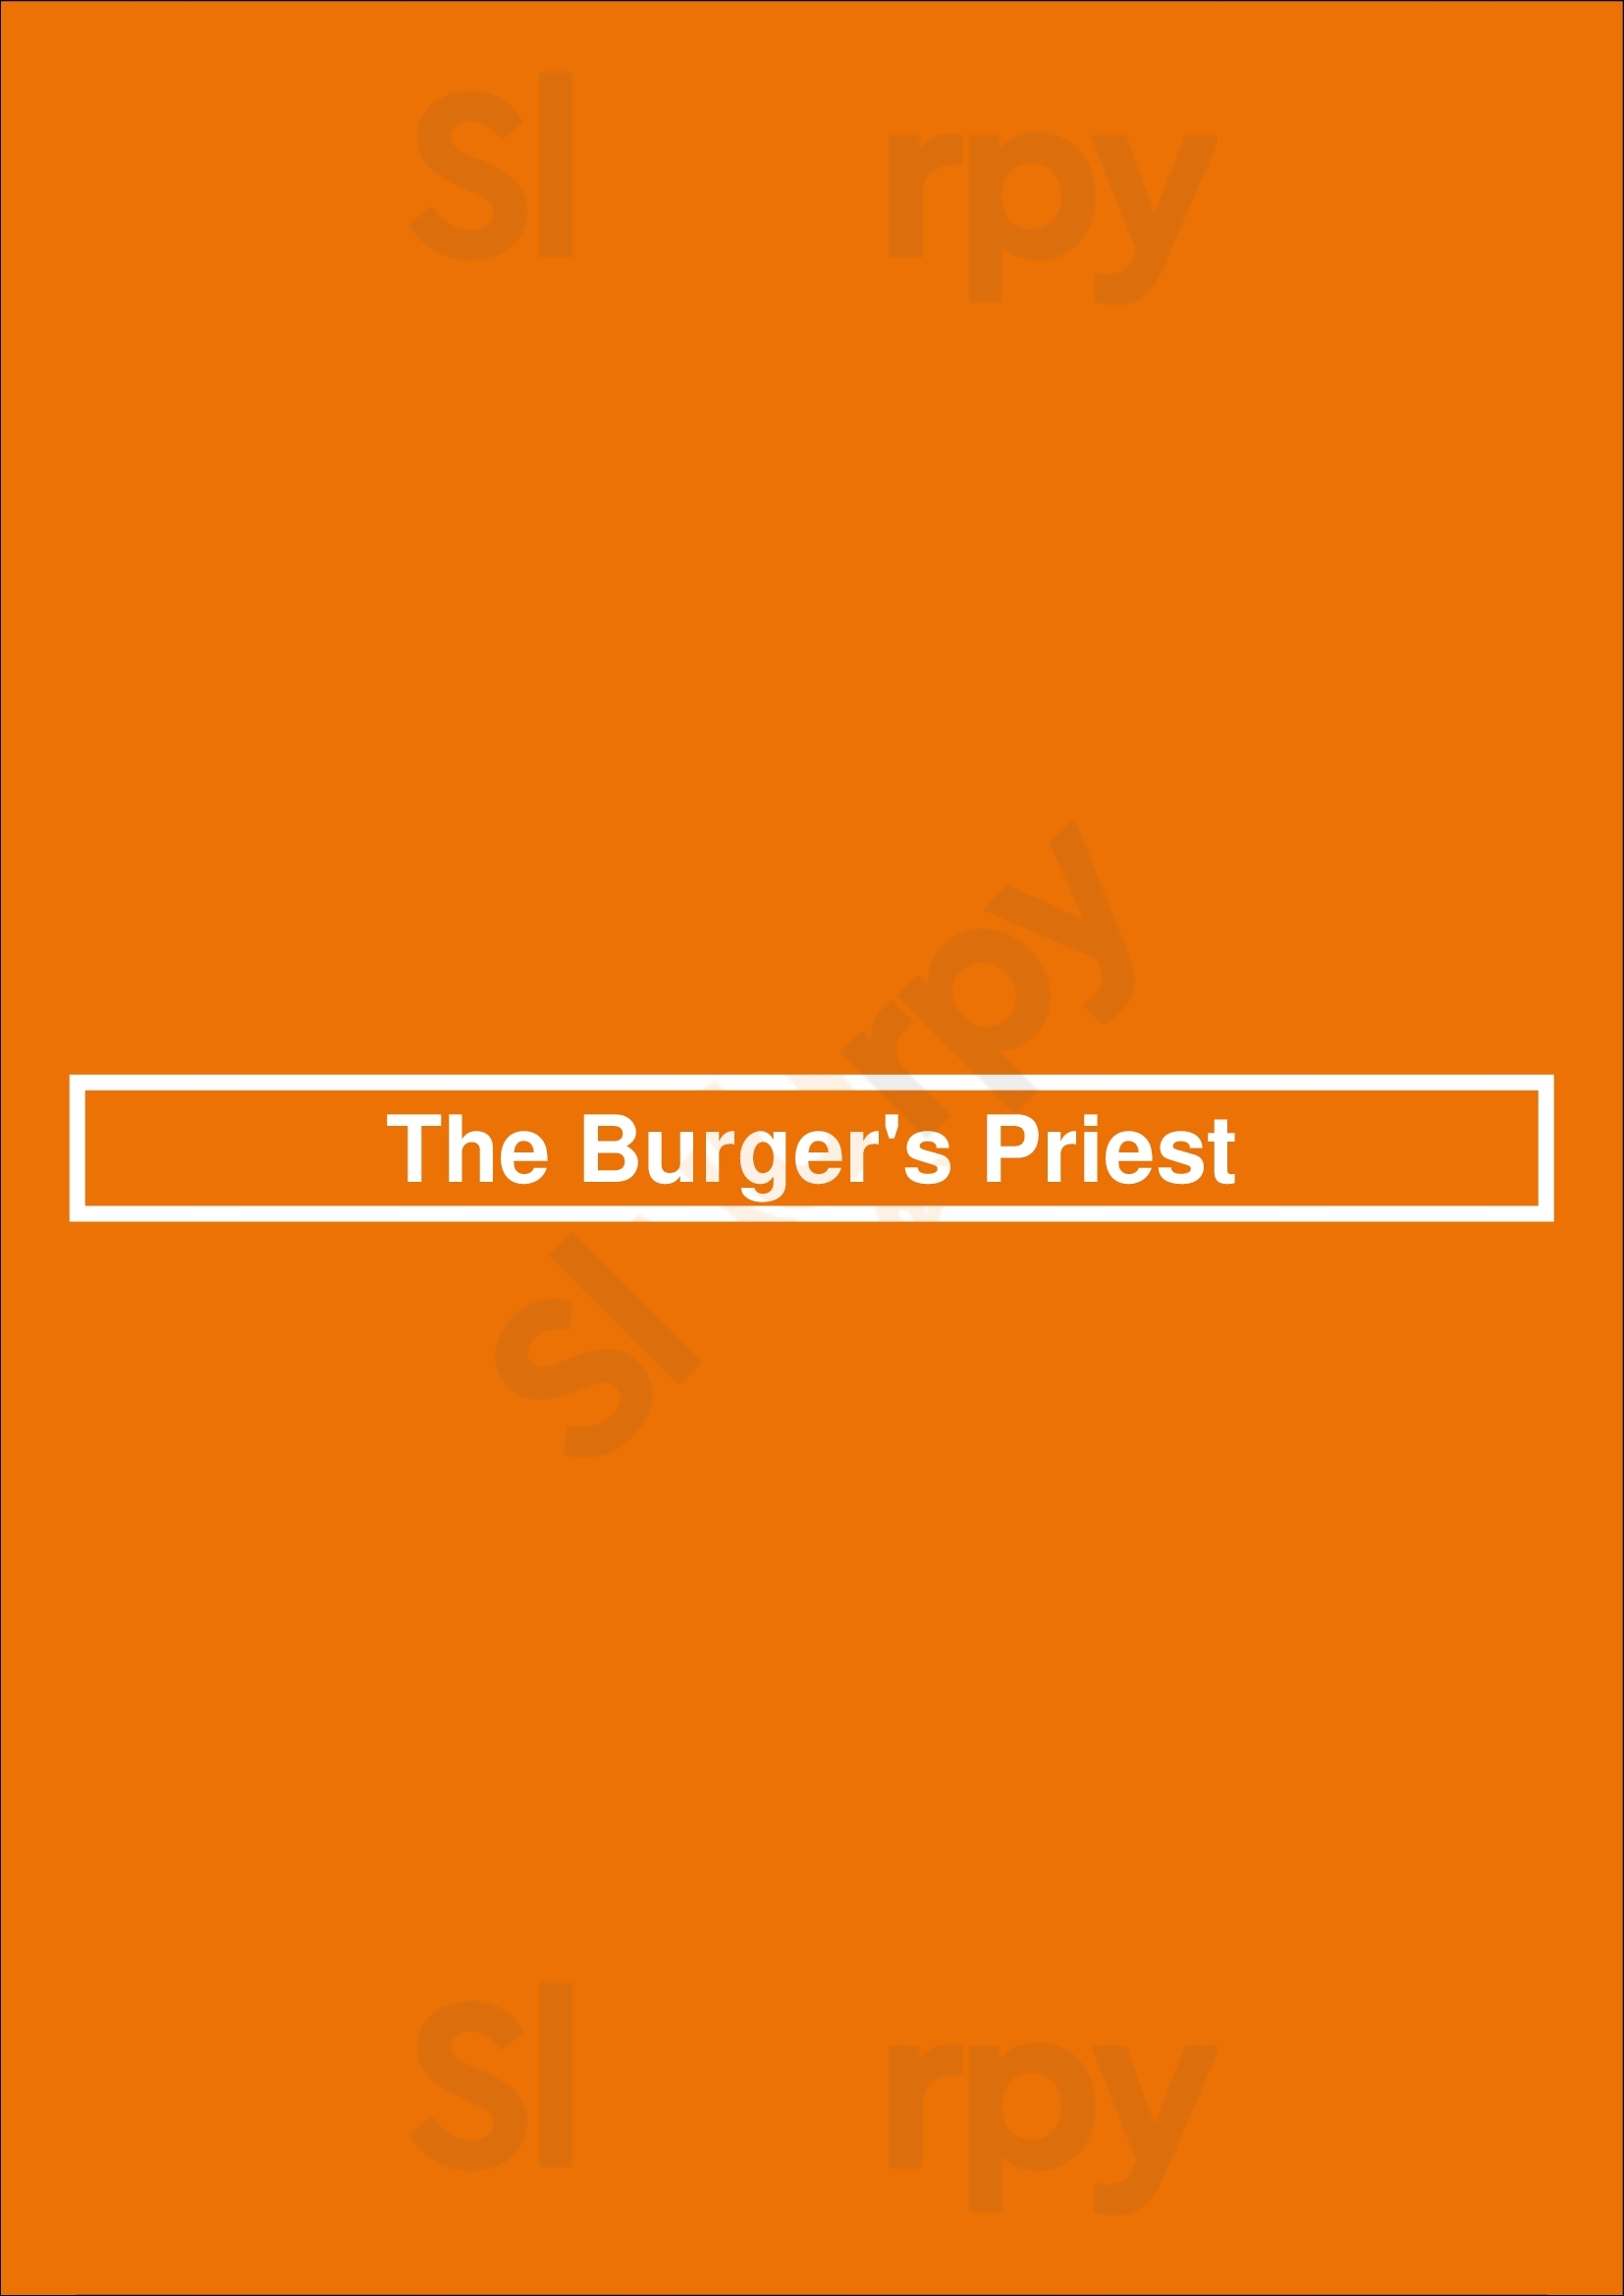 The Burger's Priest Toronto Menu - 1